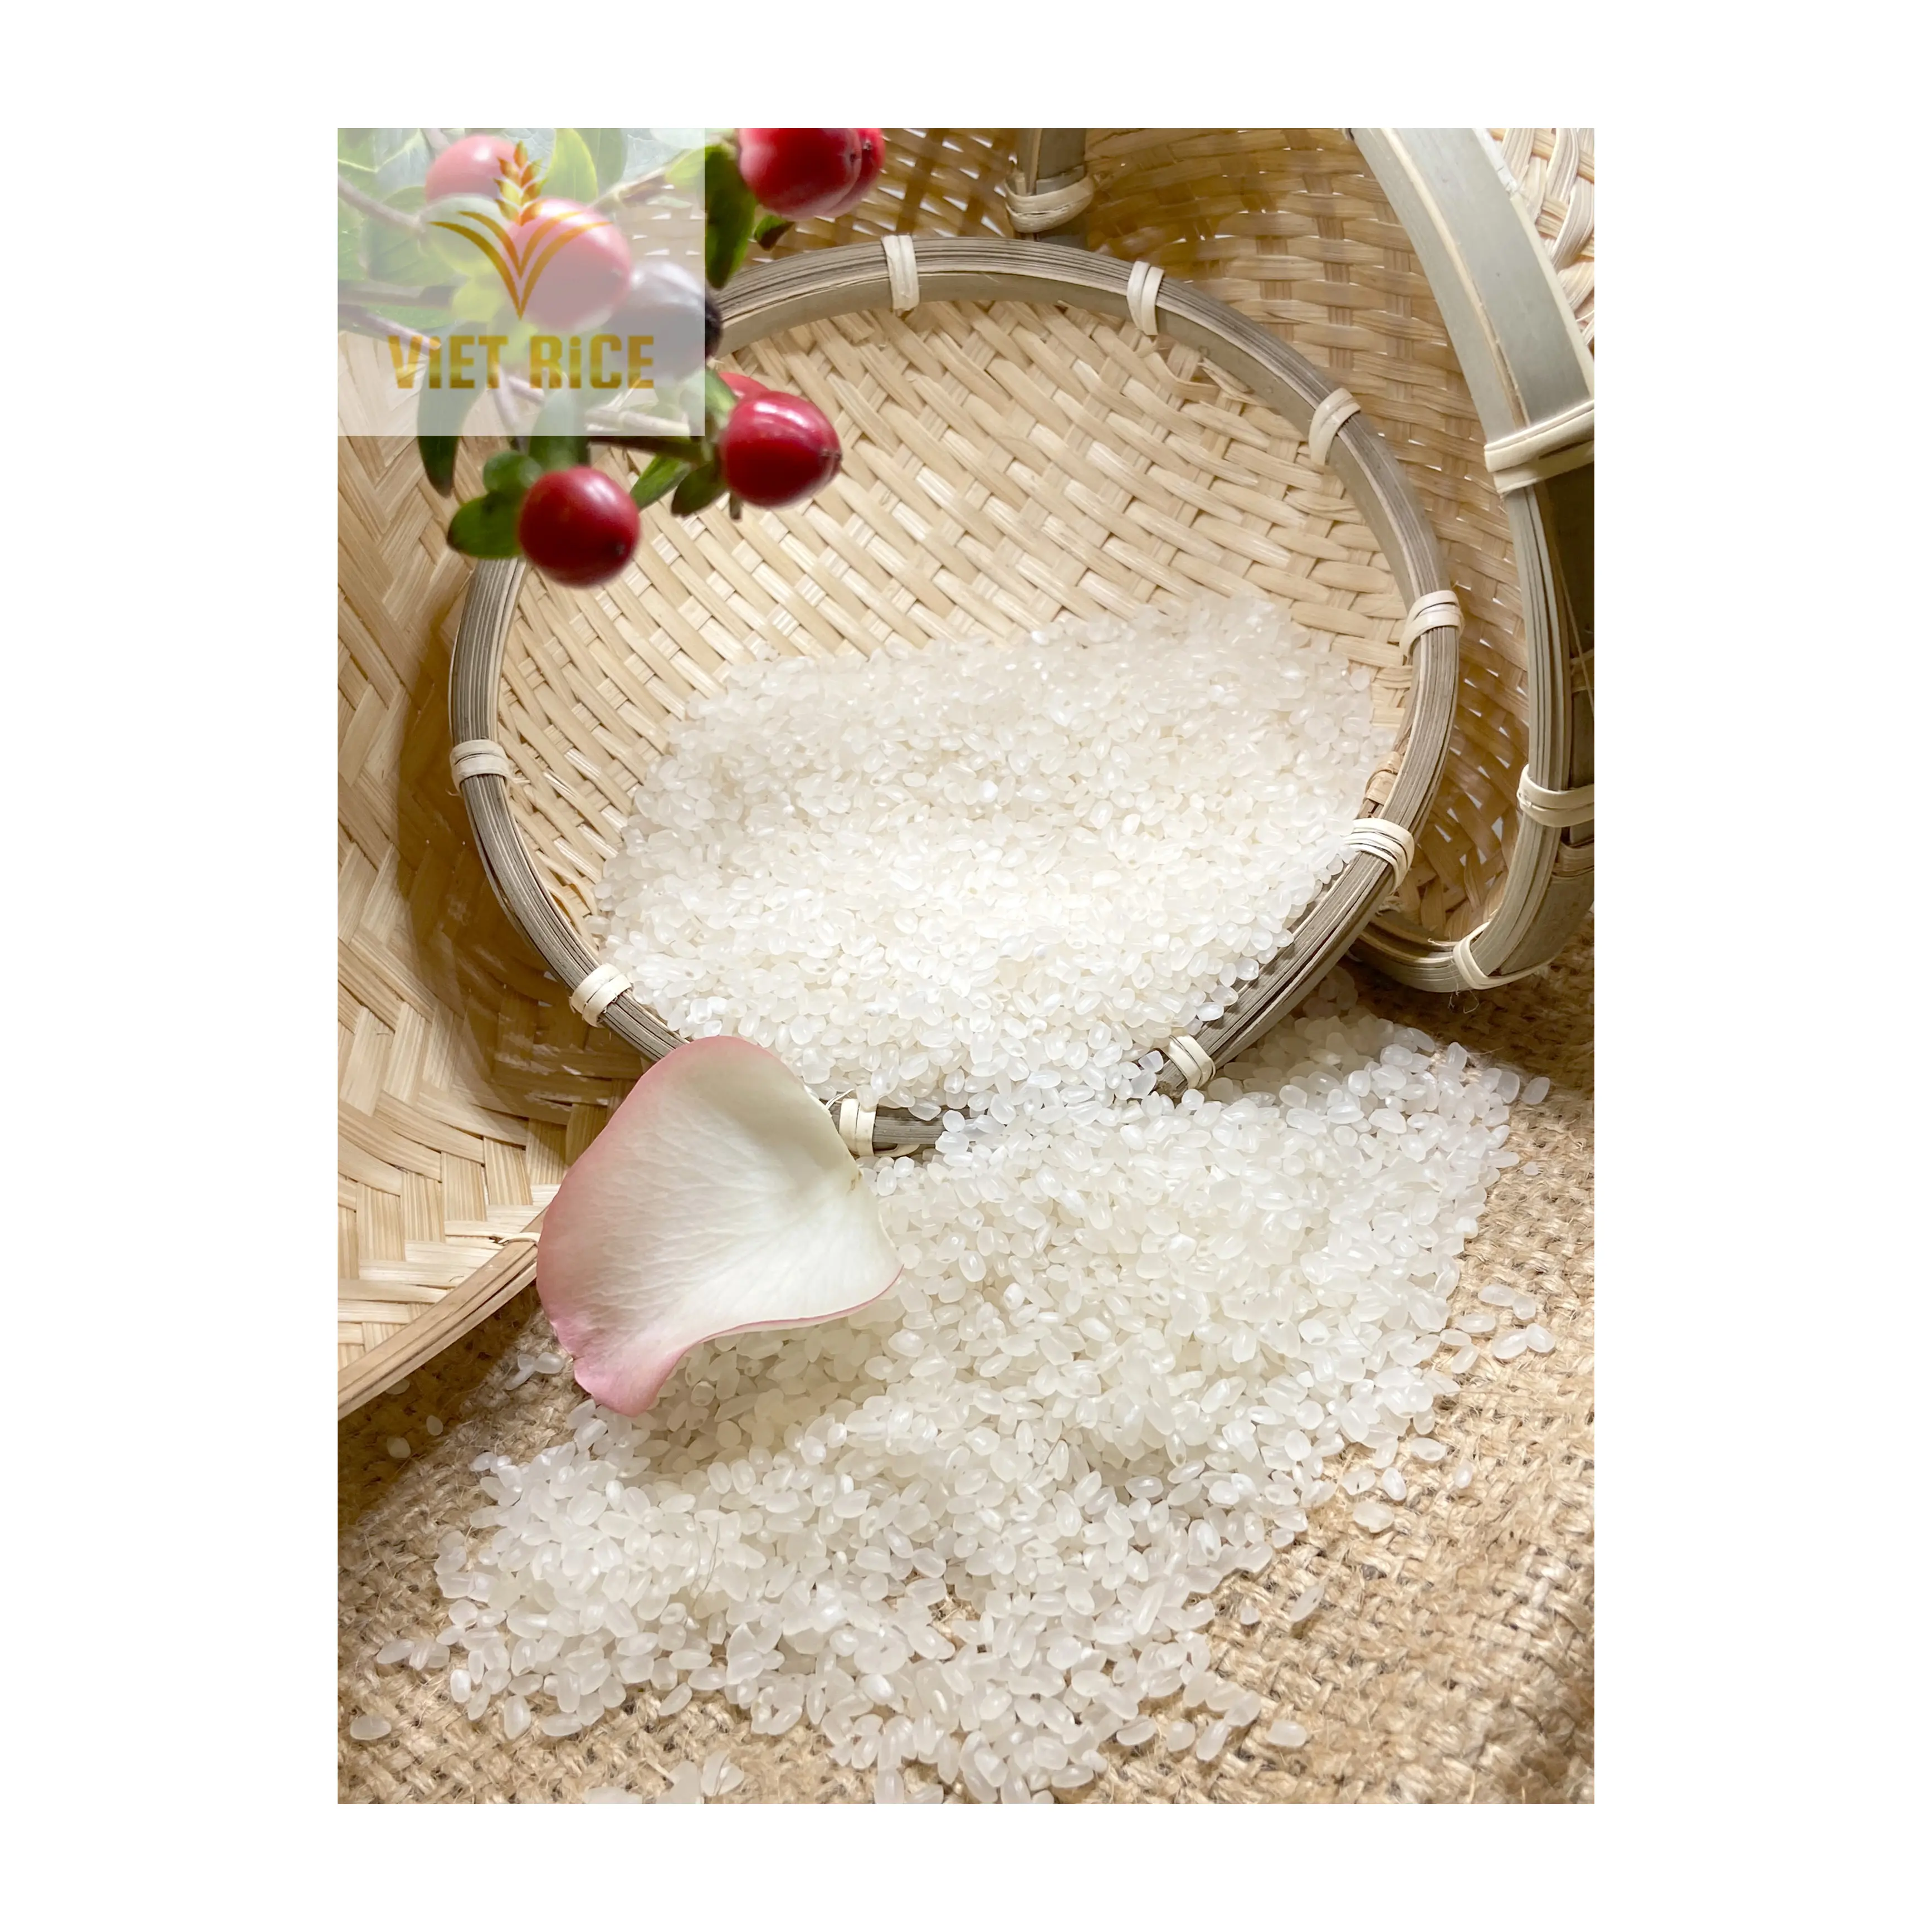 Vietnam pirinci-JAPONICA 5% kırık kısa tahıl, yüksek kaliteli kokulu pirinç pirinç fabrikasından geliyor